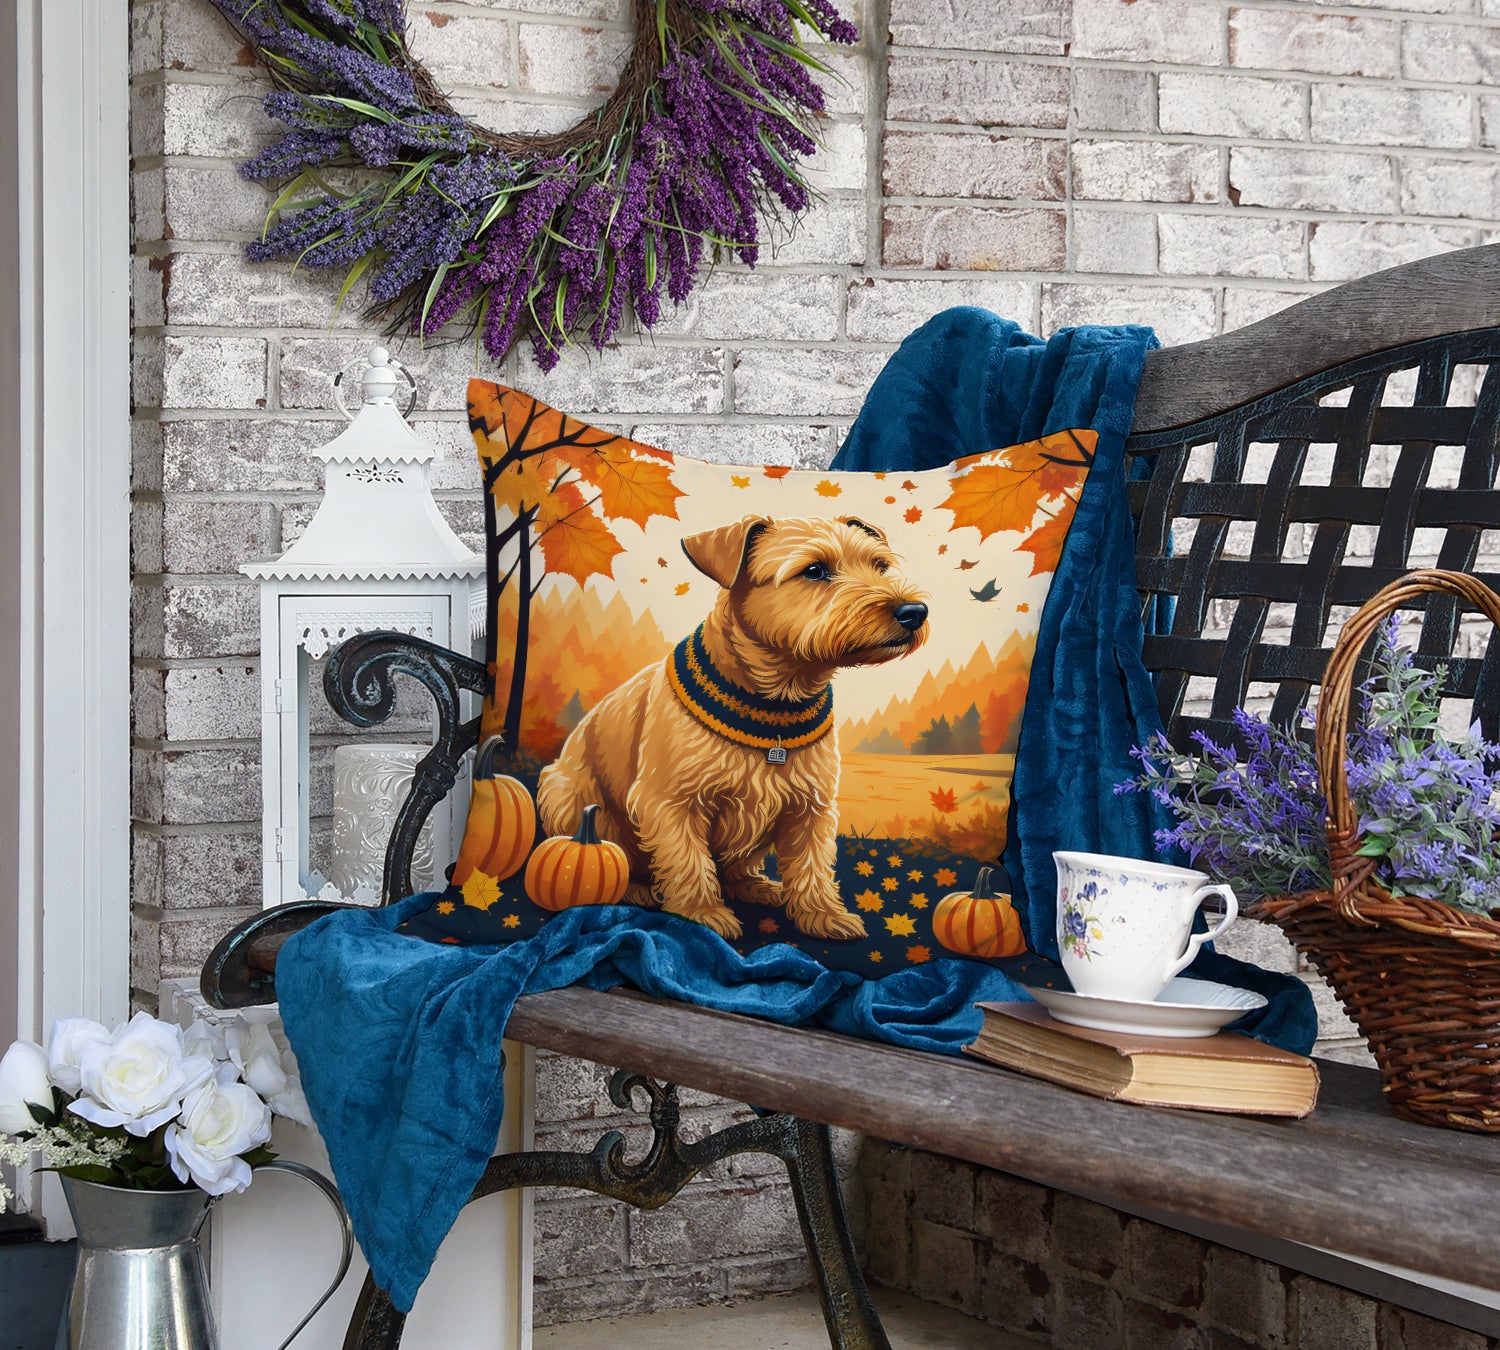 Buy this Lakeland Terrier Fall Fabric Decorative Pillow